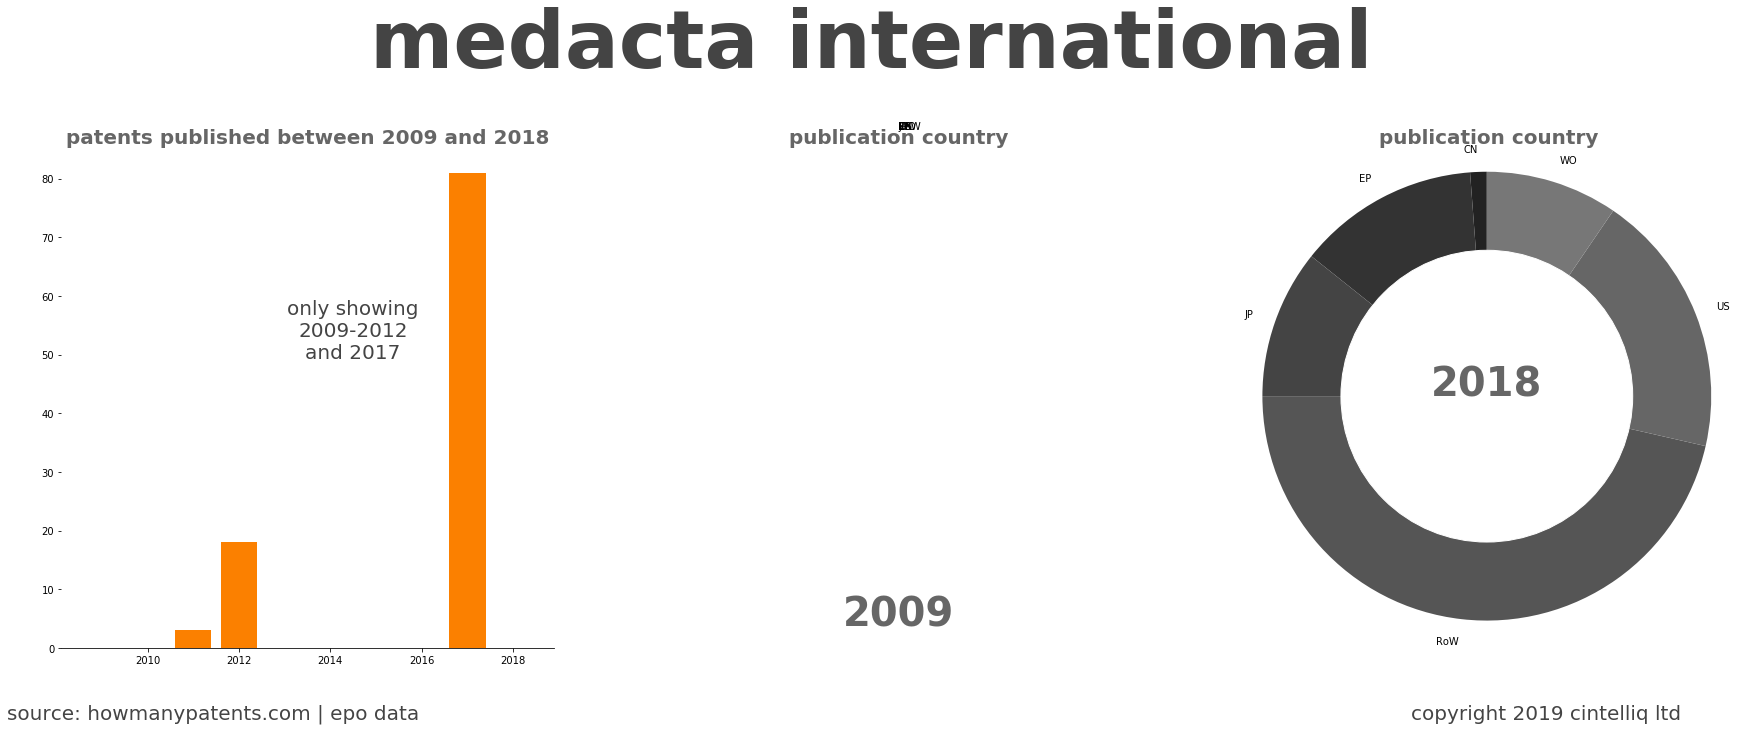 summary of patents for Medacta International